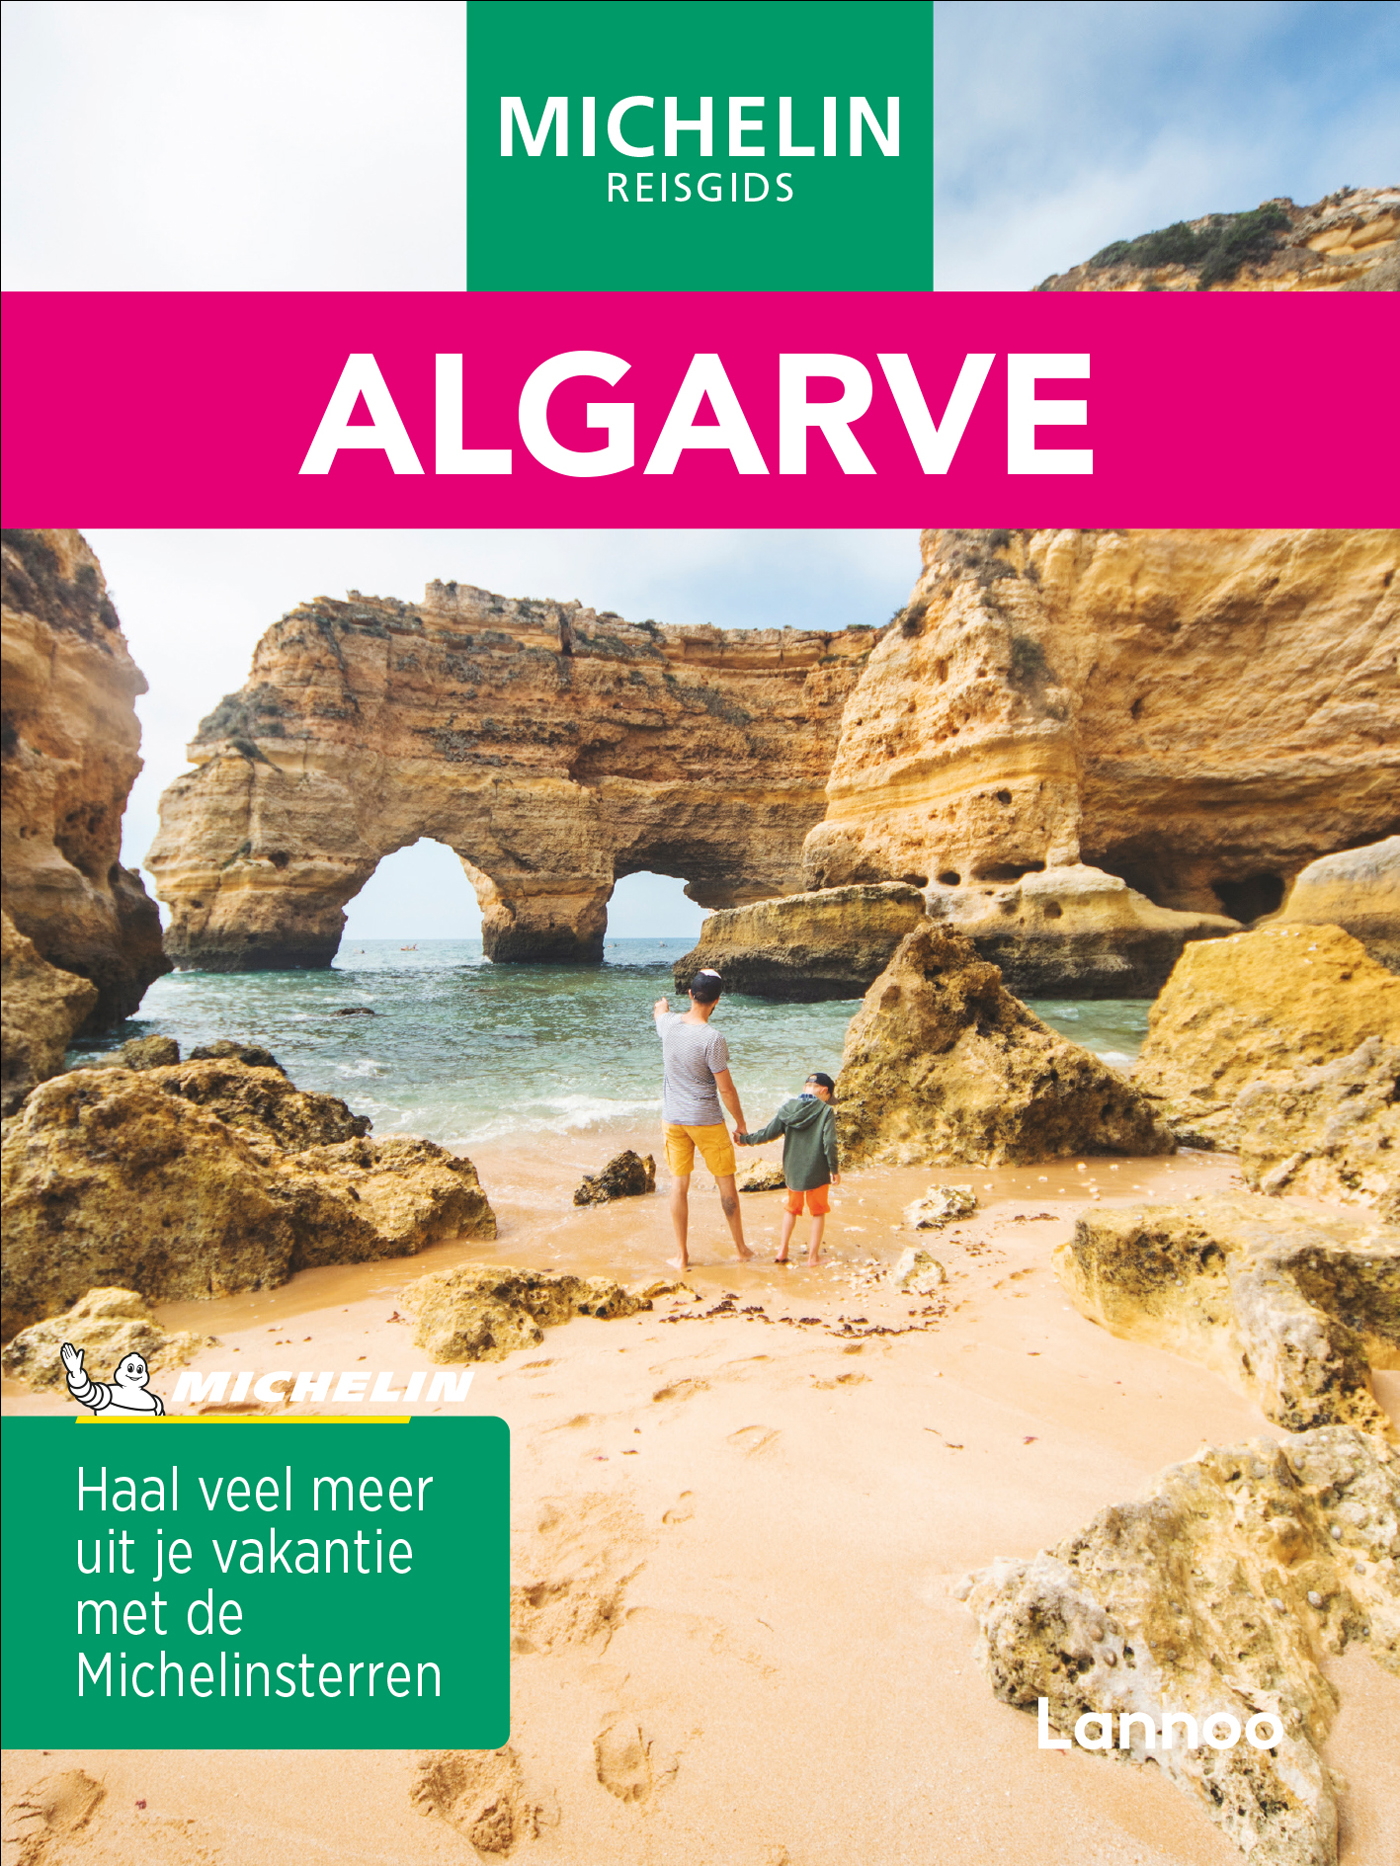 Online bestellen: Reisgids Michelin groene gids Algarve | Lannoo